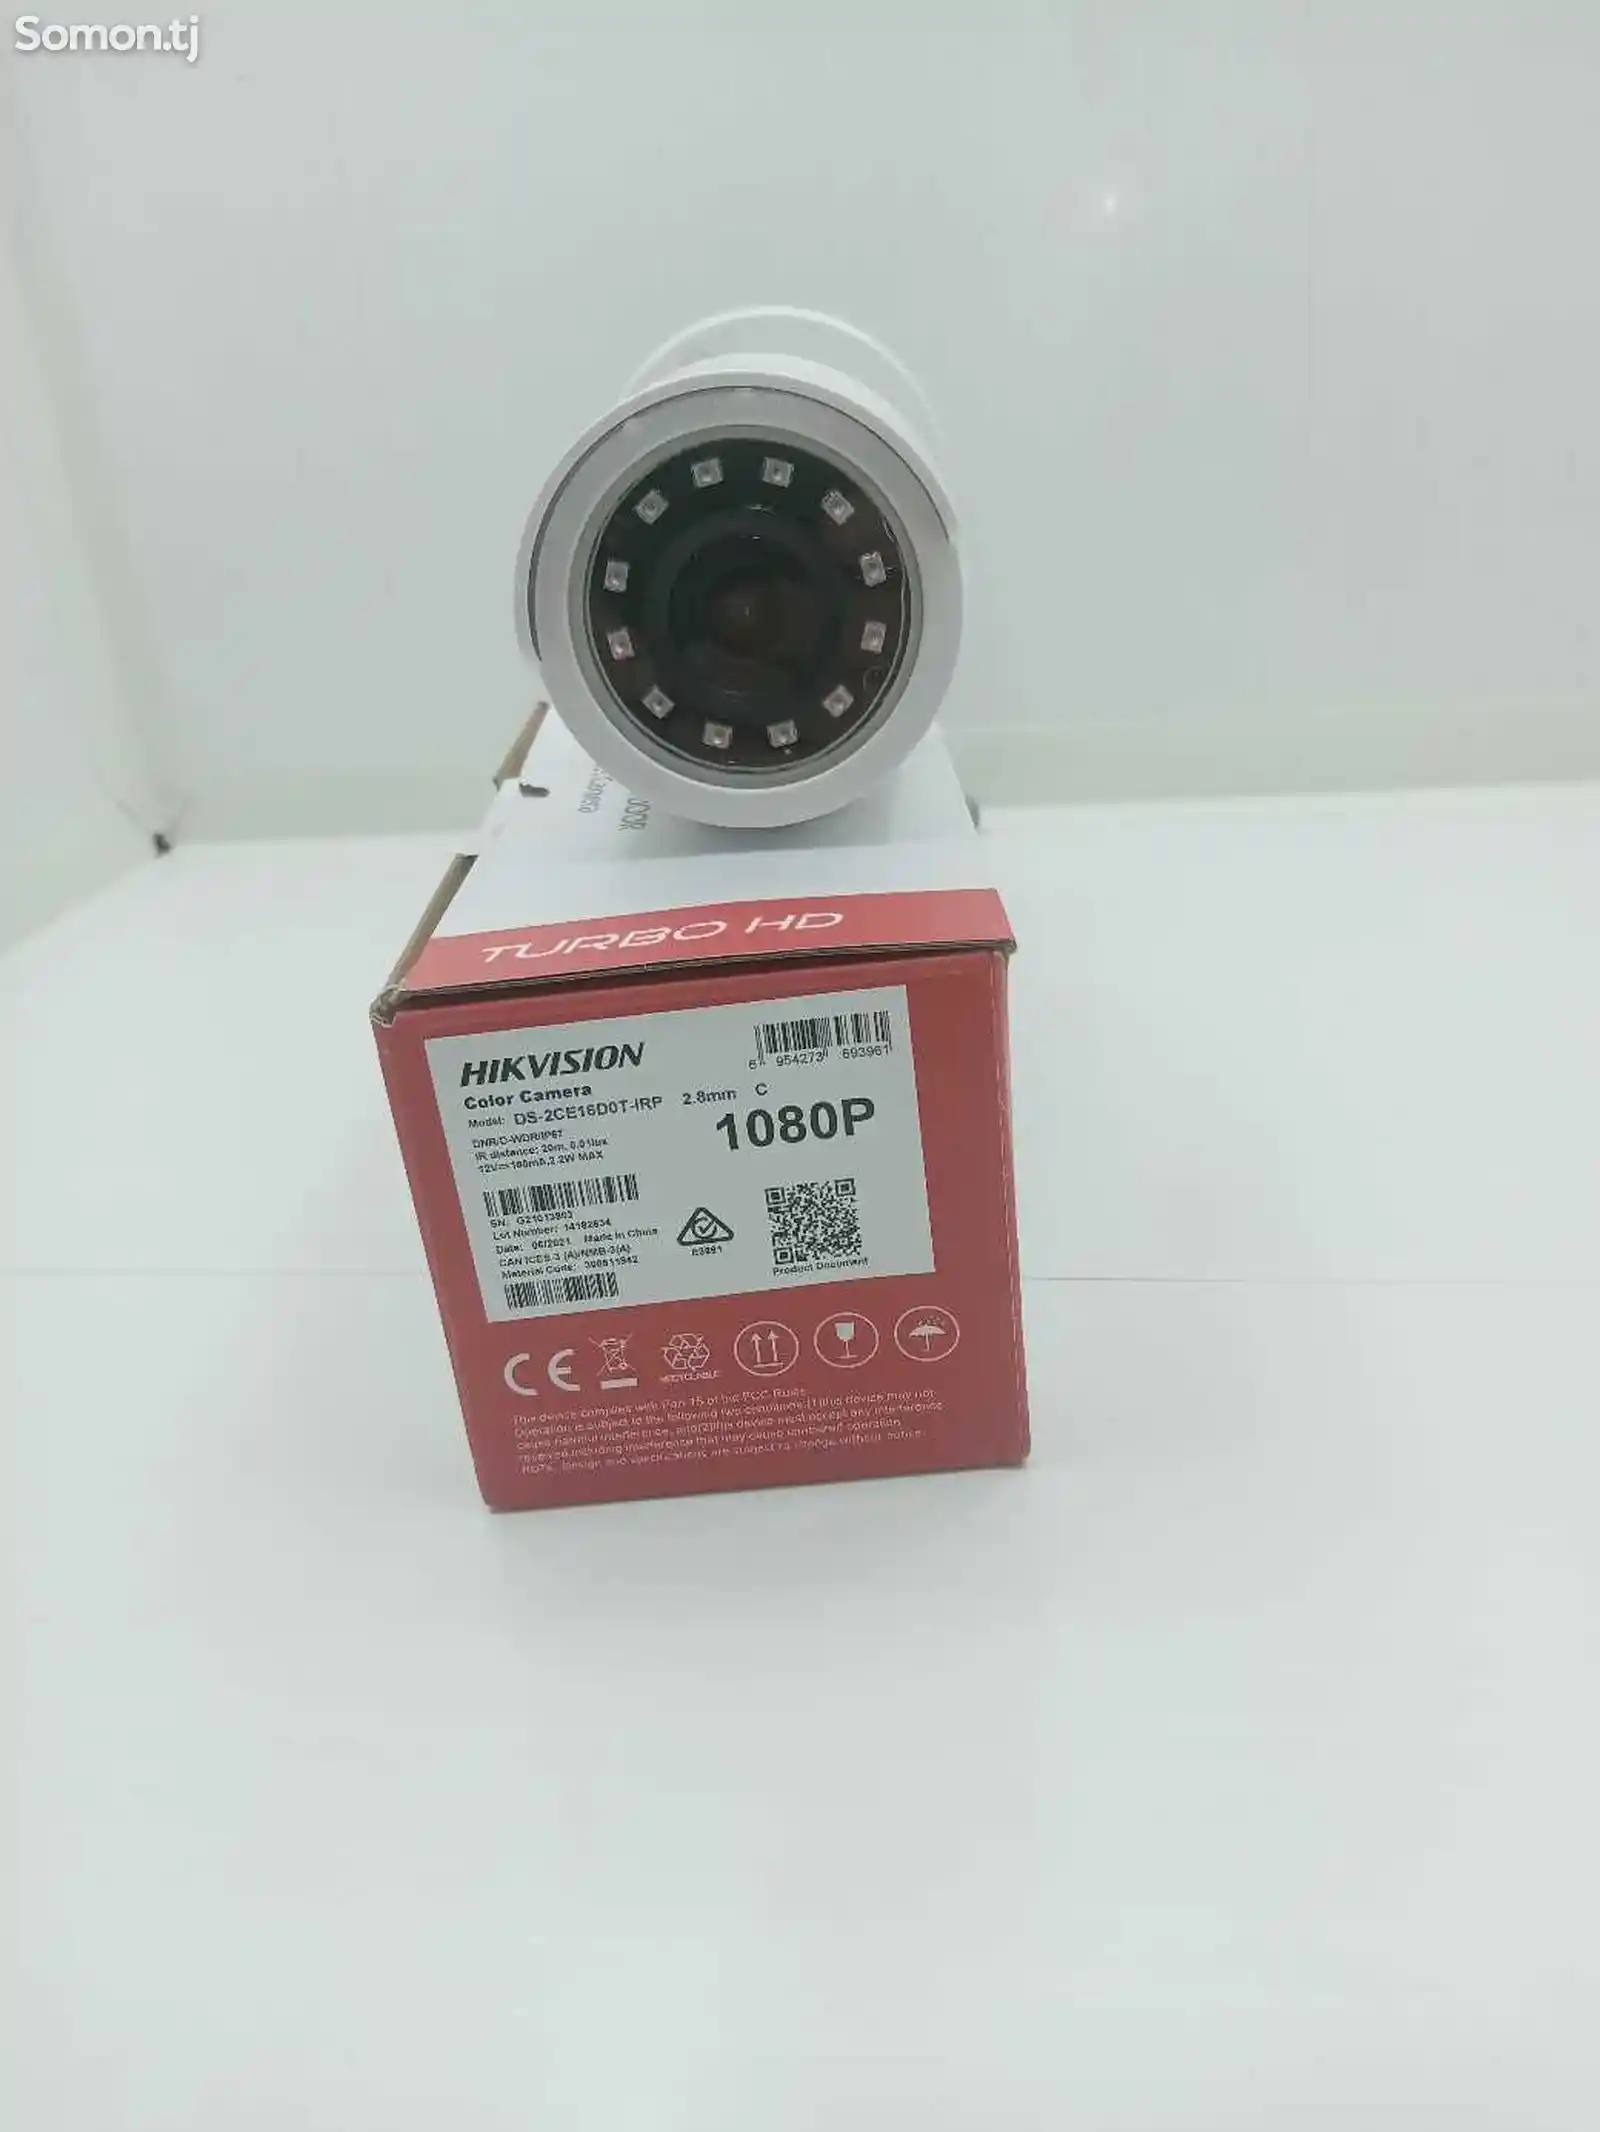 Turbo HD видеокамера DS-2CE16D0T-5